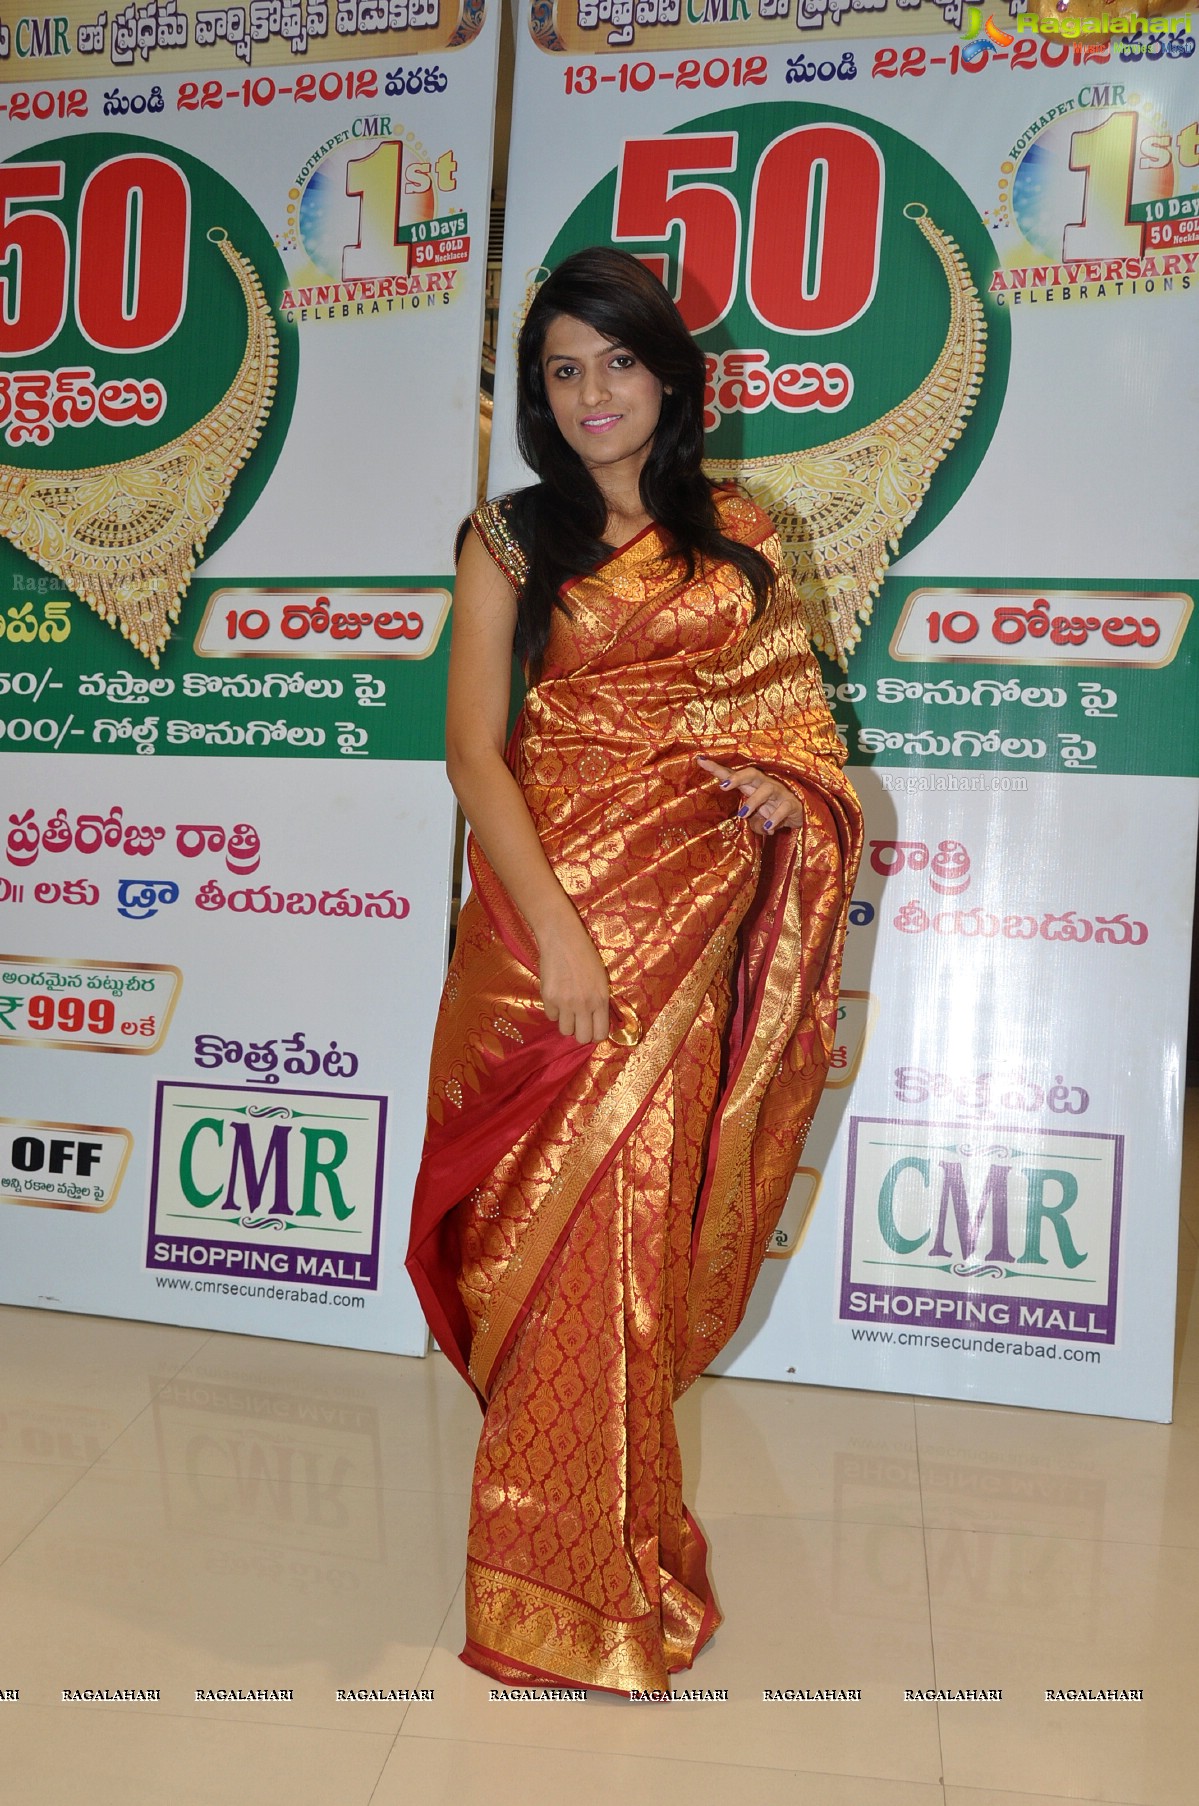 Kothapet CMR First Anniversary Celebrations